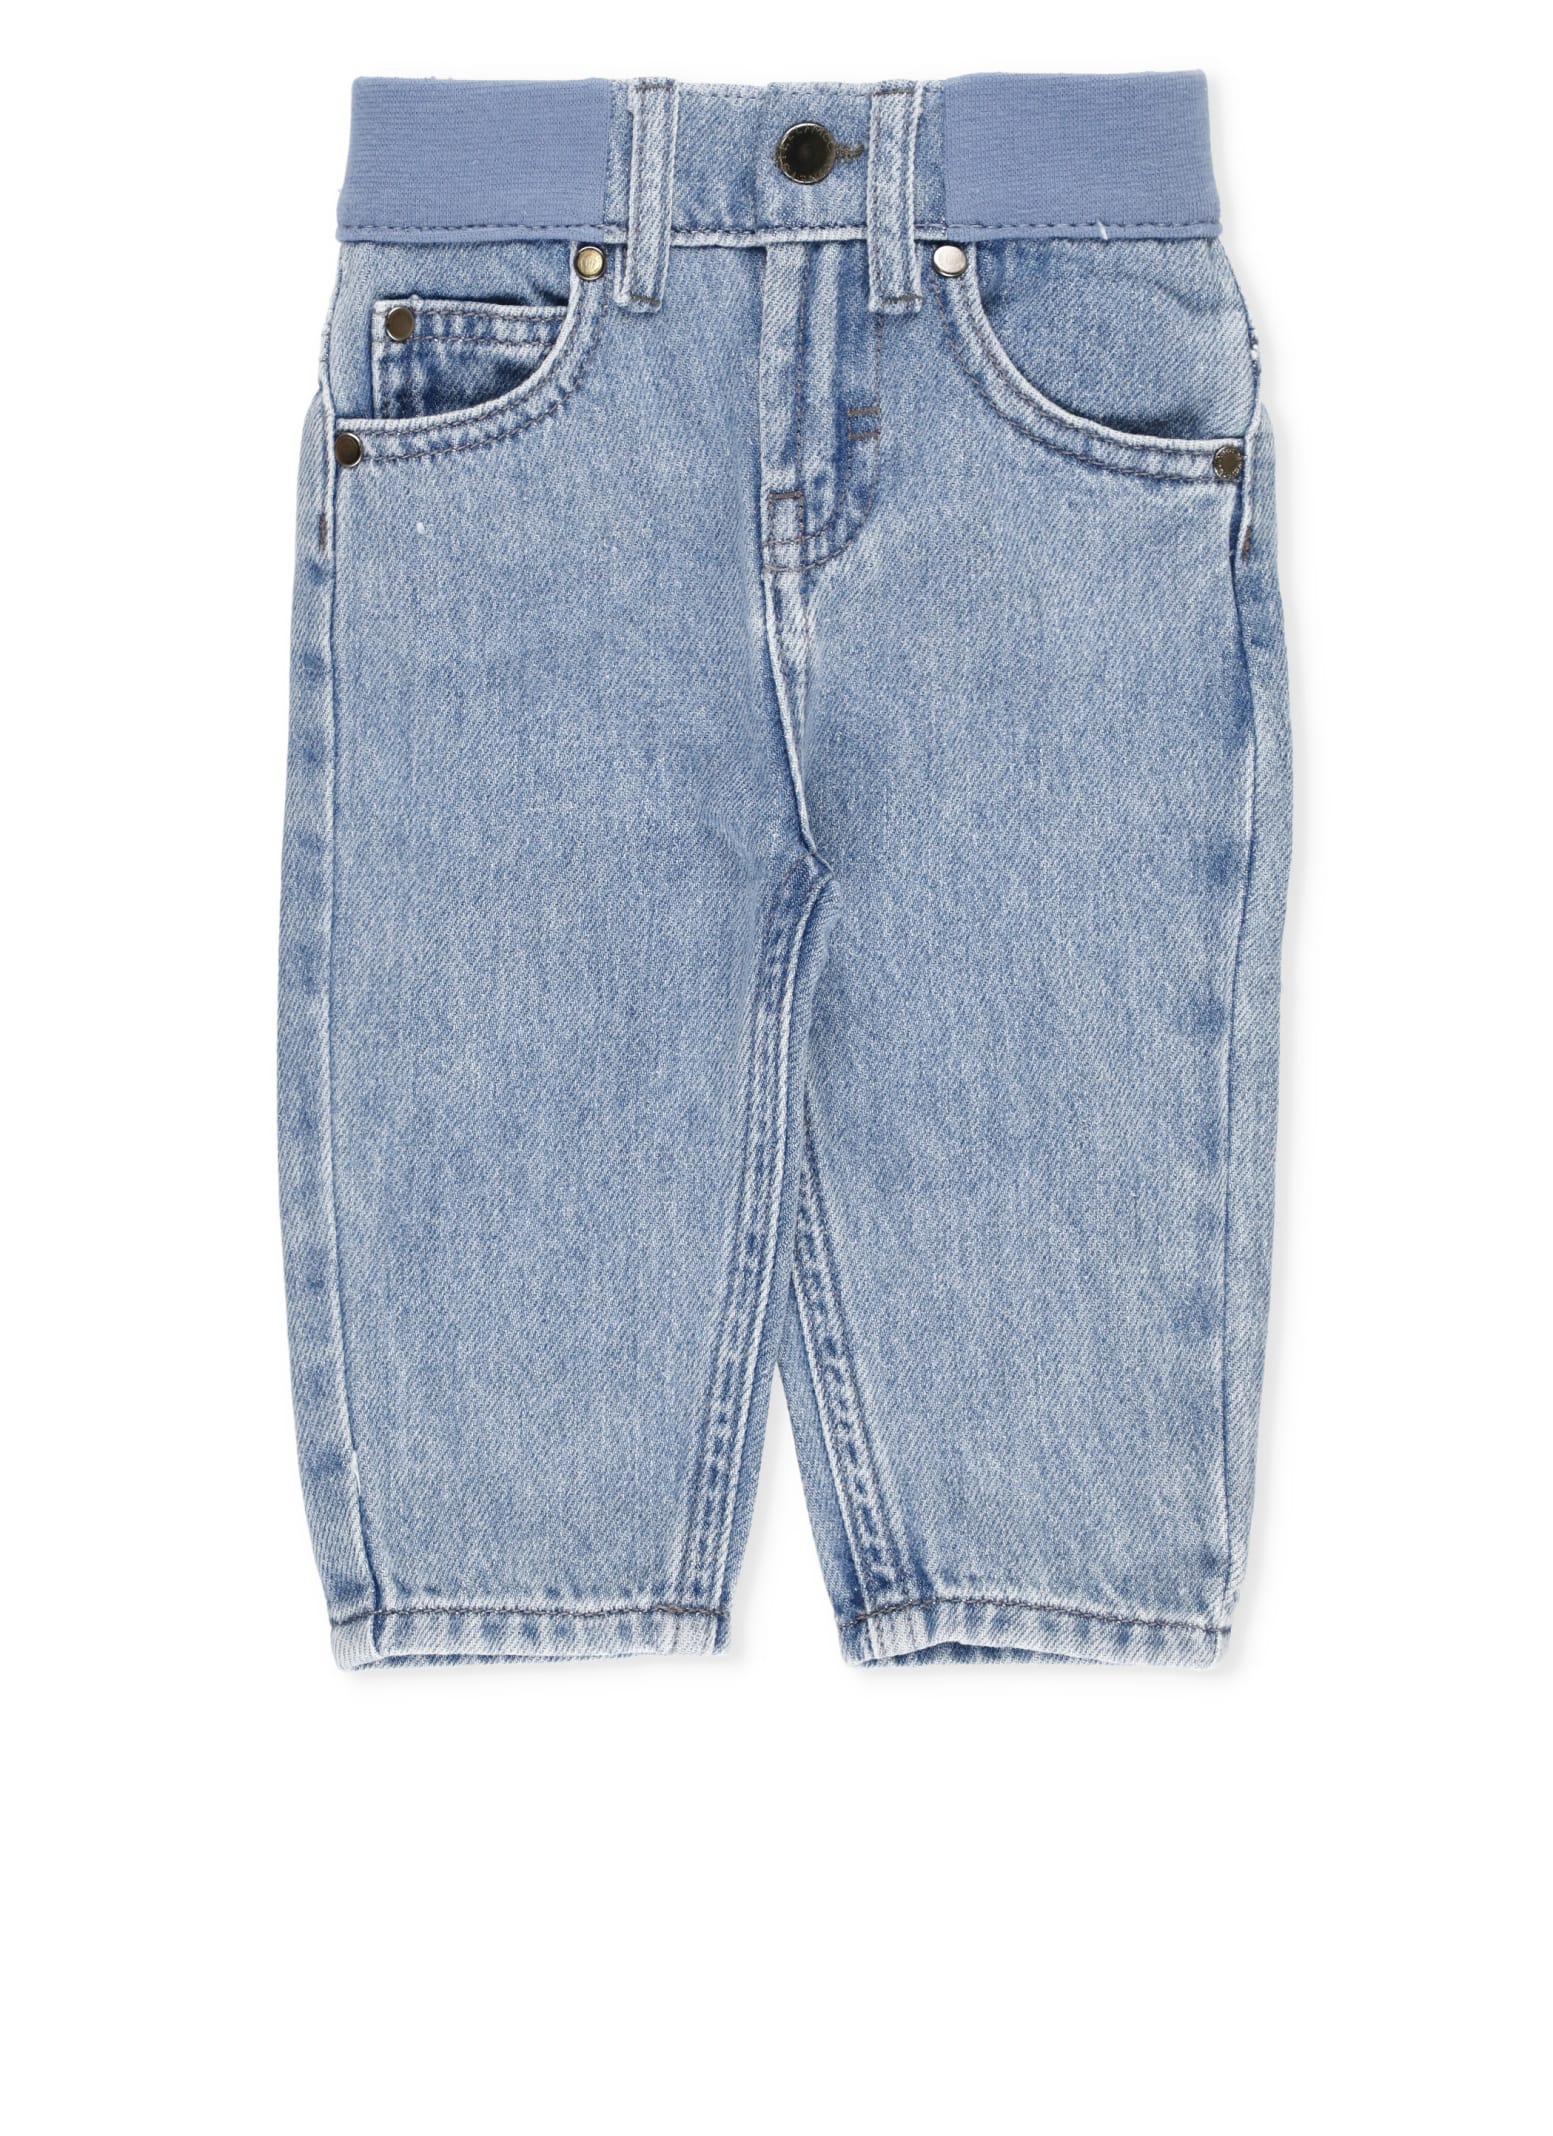 Stella McCartney Cotton Jeans